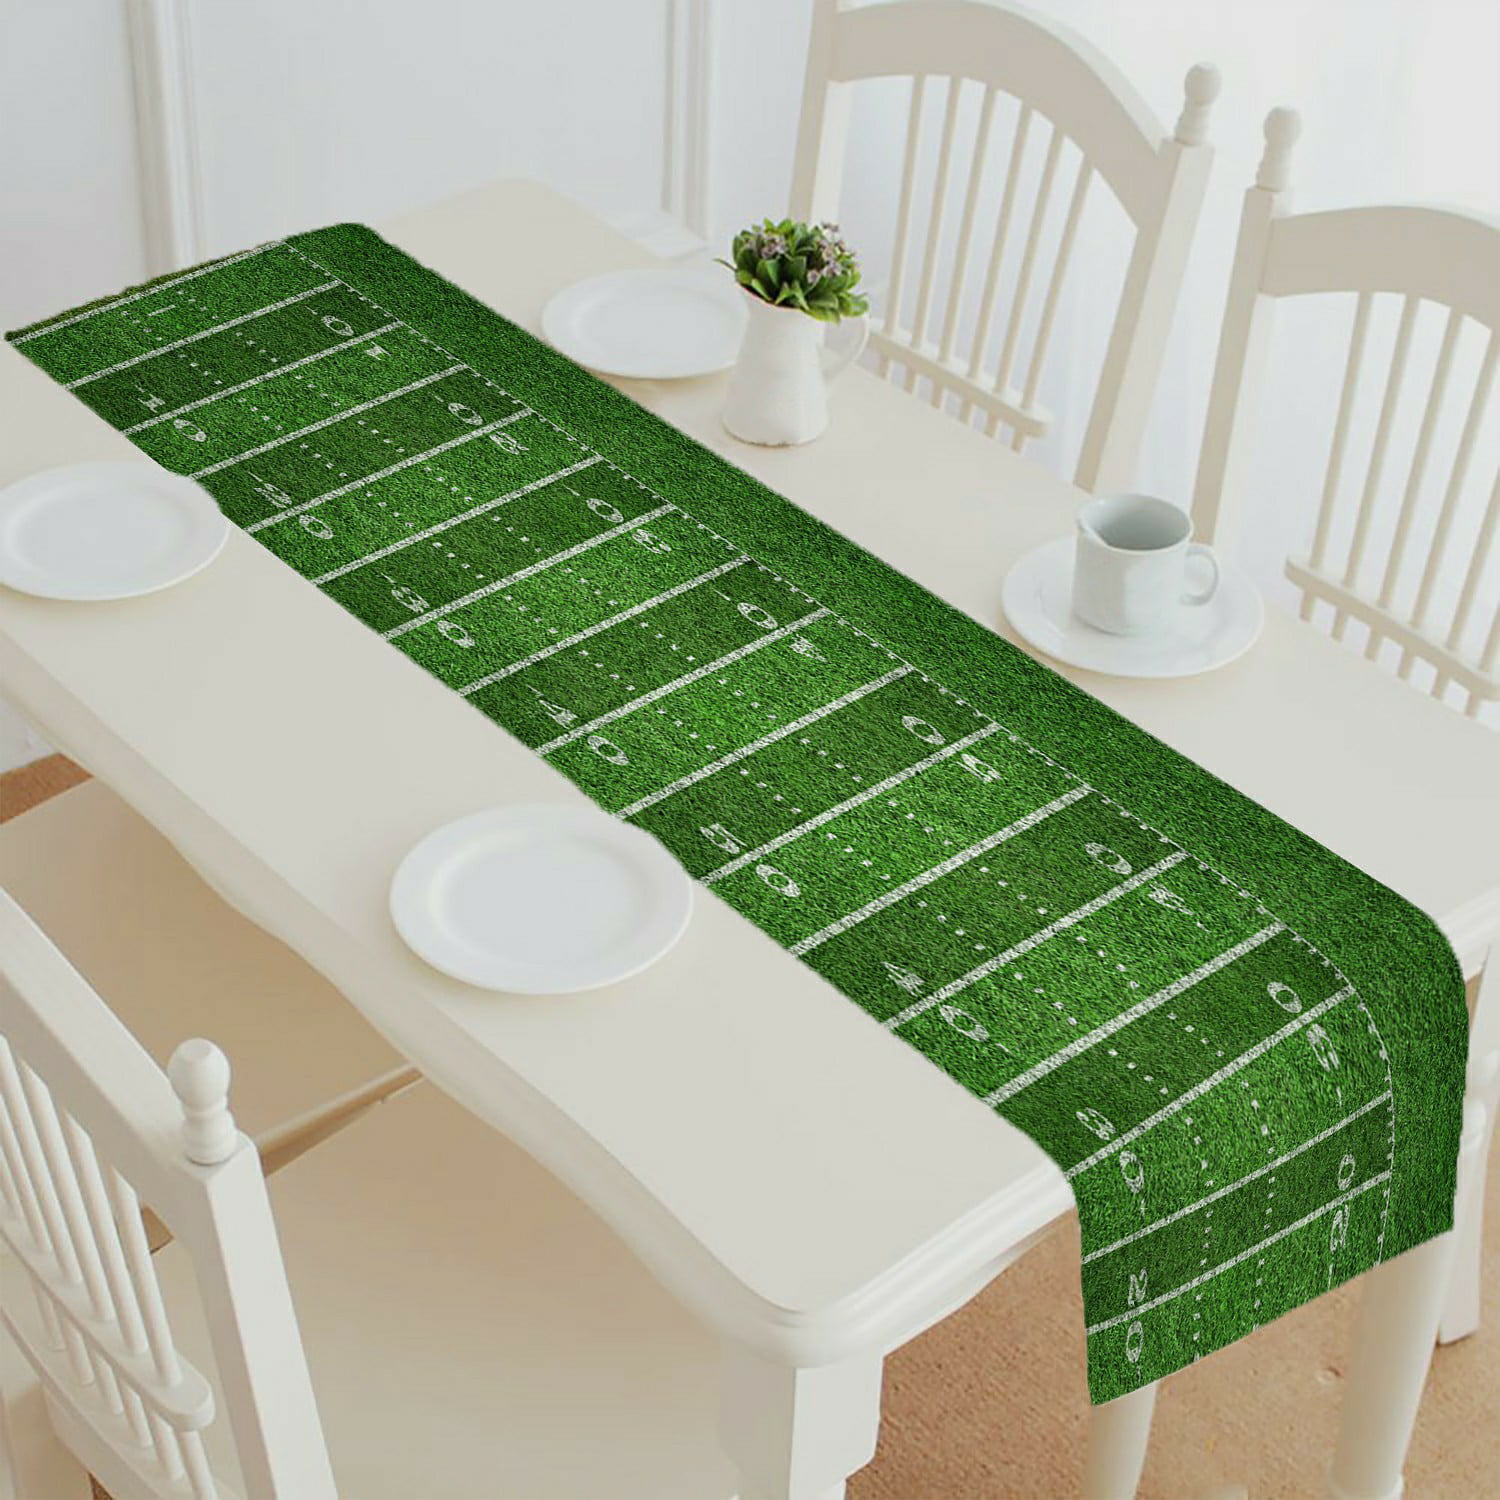 Grass Table Runner, Garden Party Table Cover, Football Table